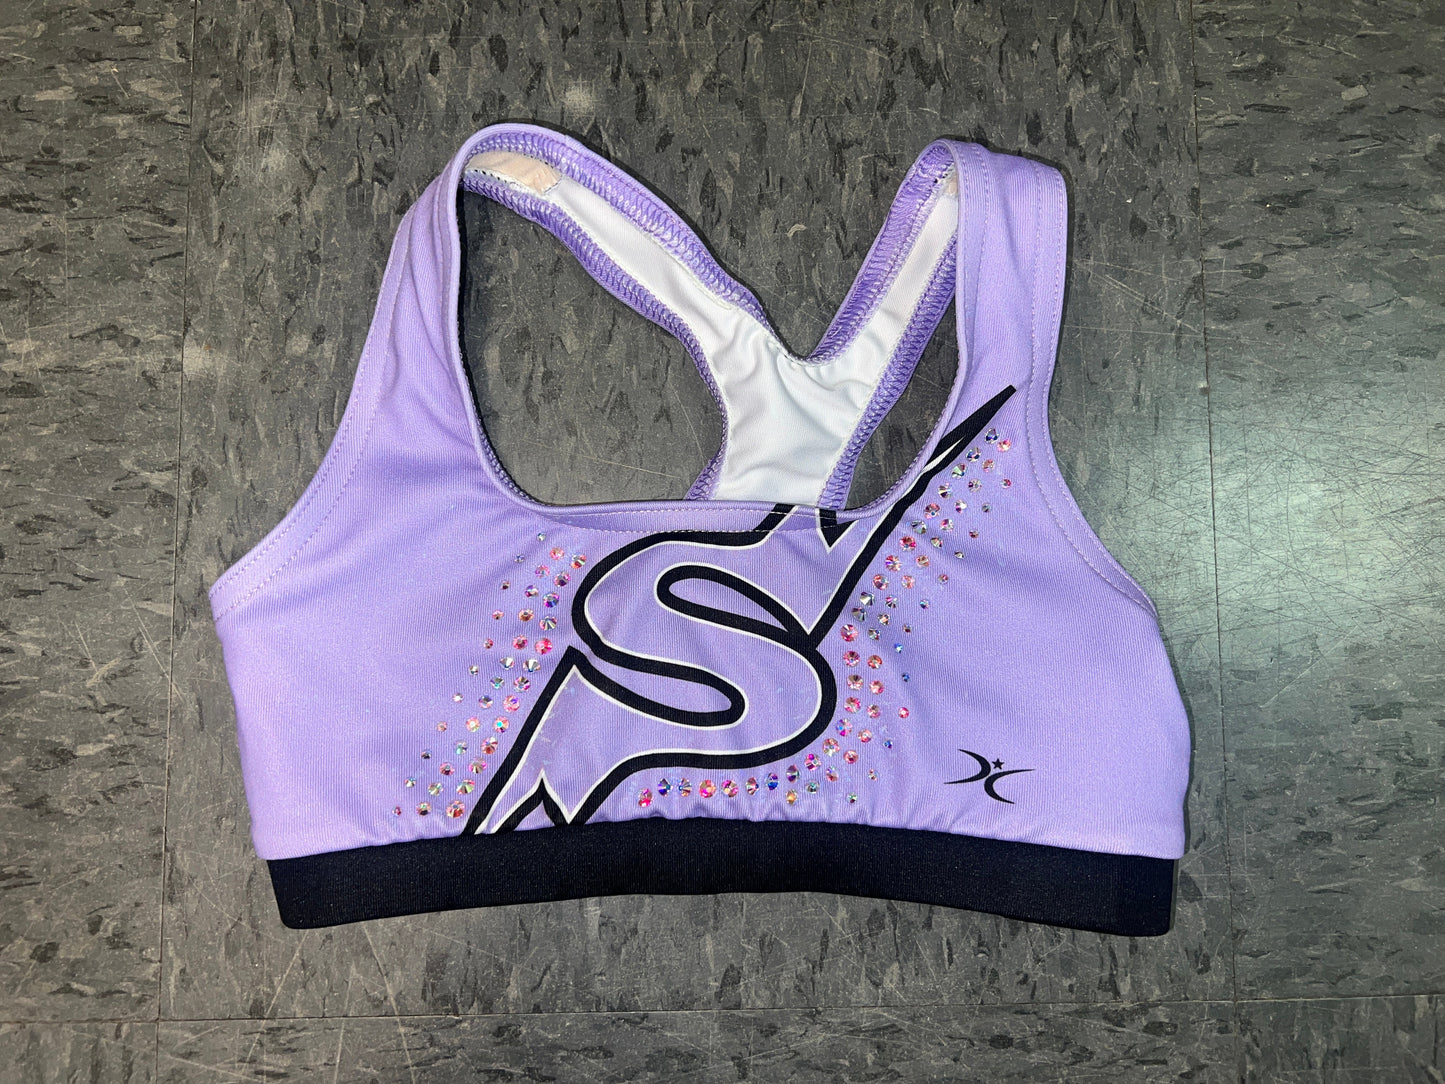 Pro Cheer Sports Bra - "S" Logo Lavender